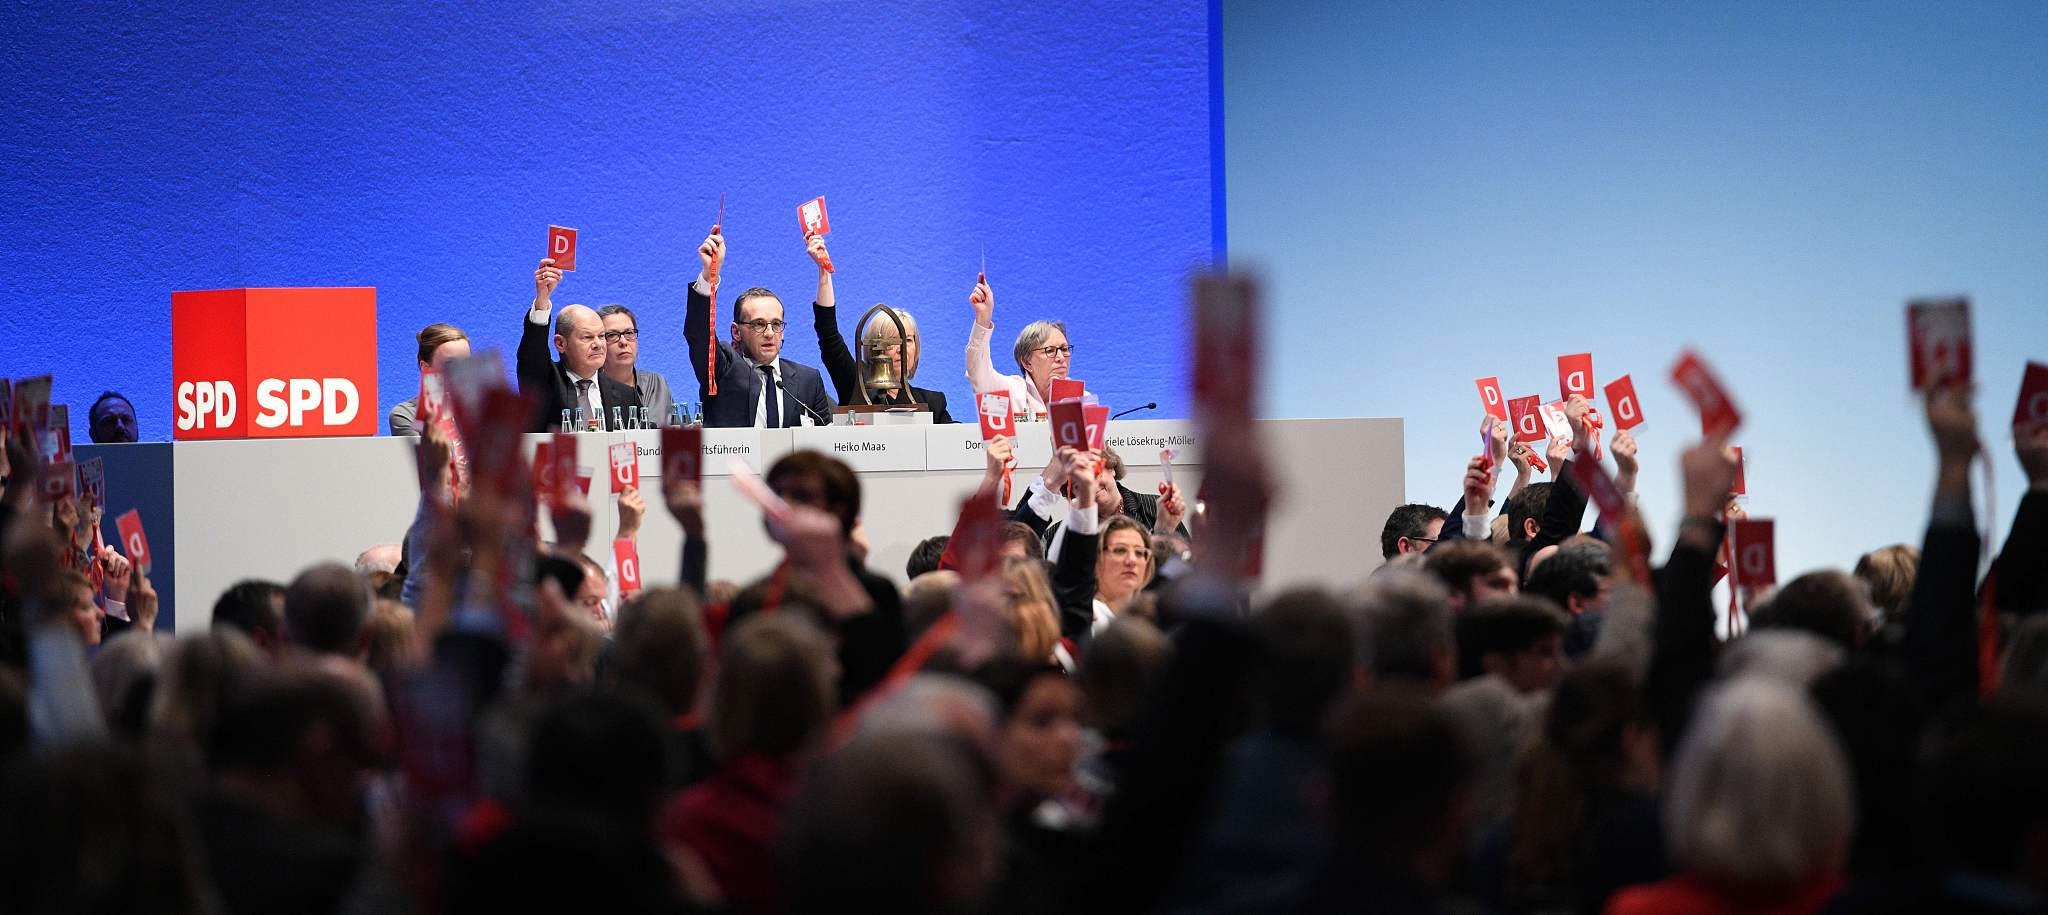 SPD approves talks for German grand coalition - CGTN